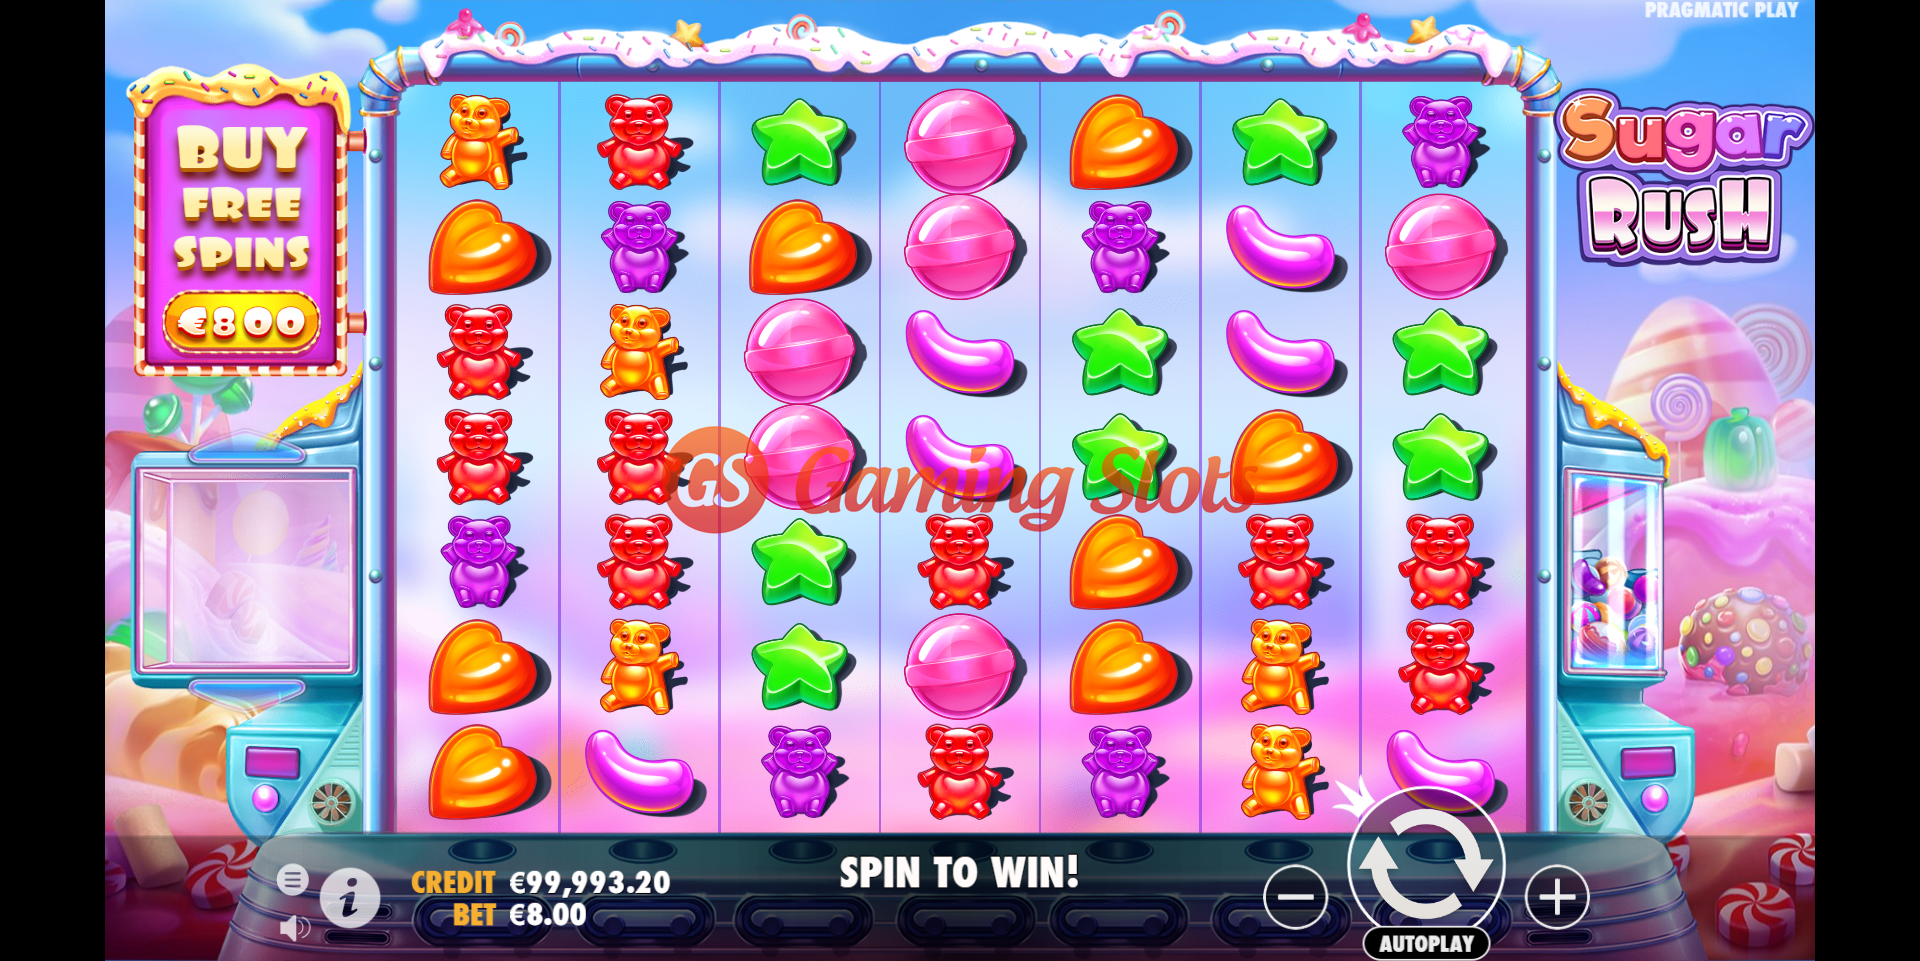 Base Game for Sugar Rush slot from Pragmatic Play